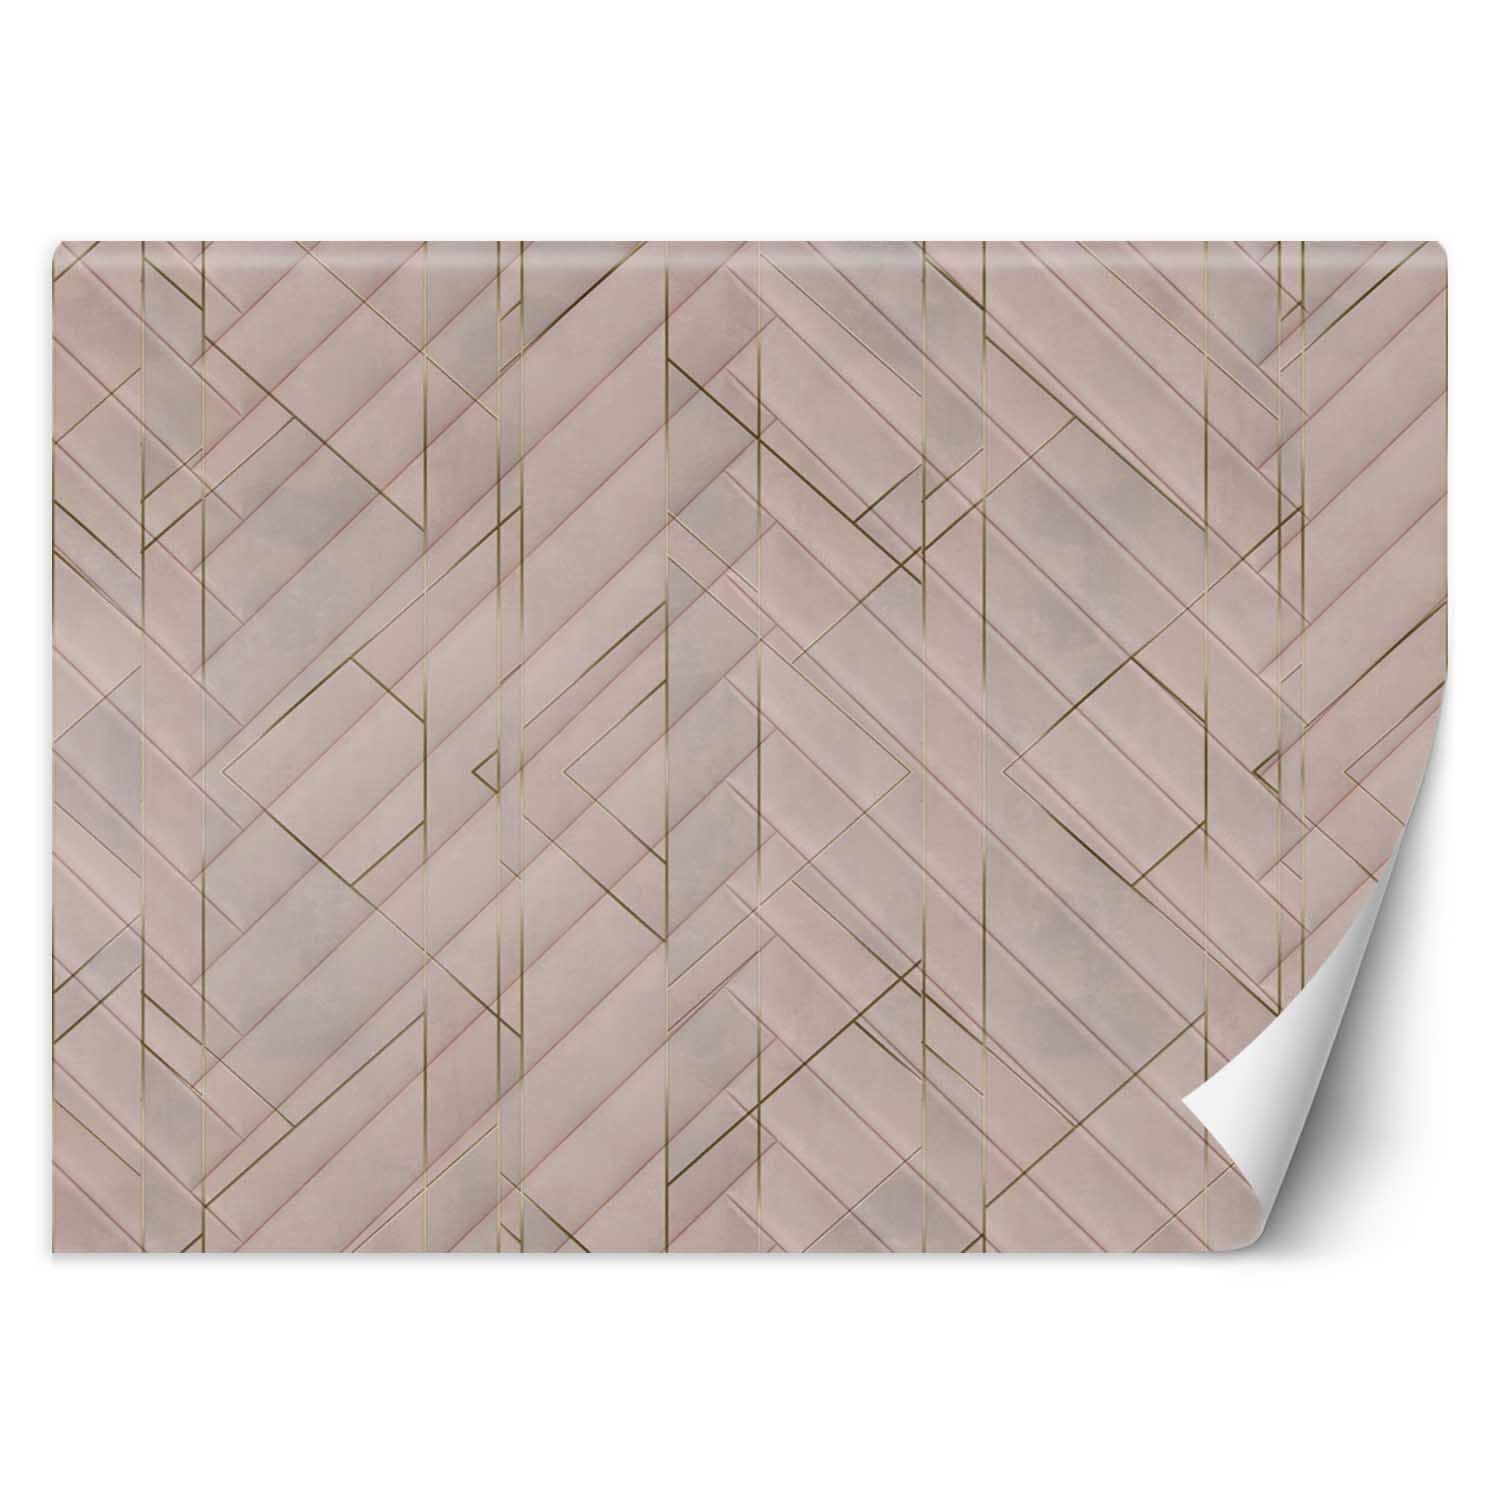 Trend24 – Behang – Geometrisch Patroon – Vliesbehang – Behang Woonkamer – Fotobehang – 400x280x2 cm – Incl. behanglijm